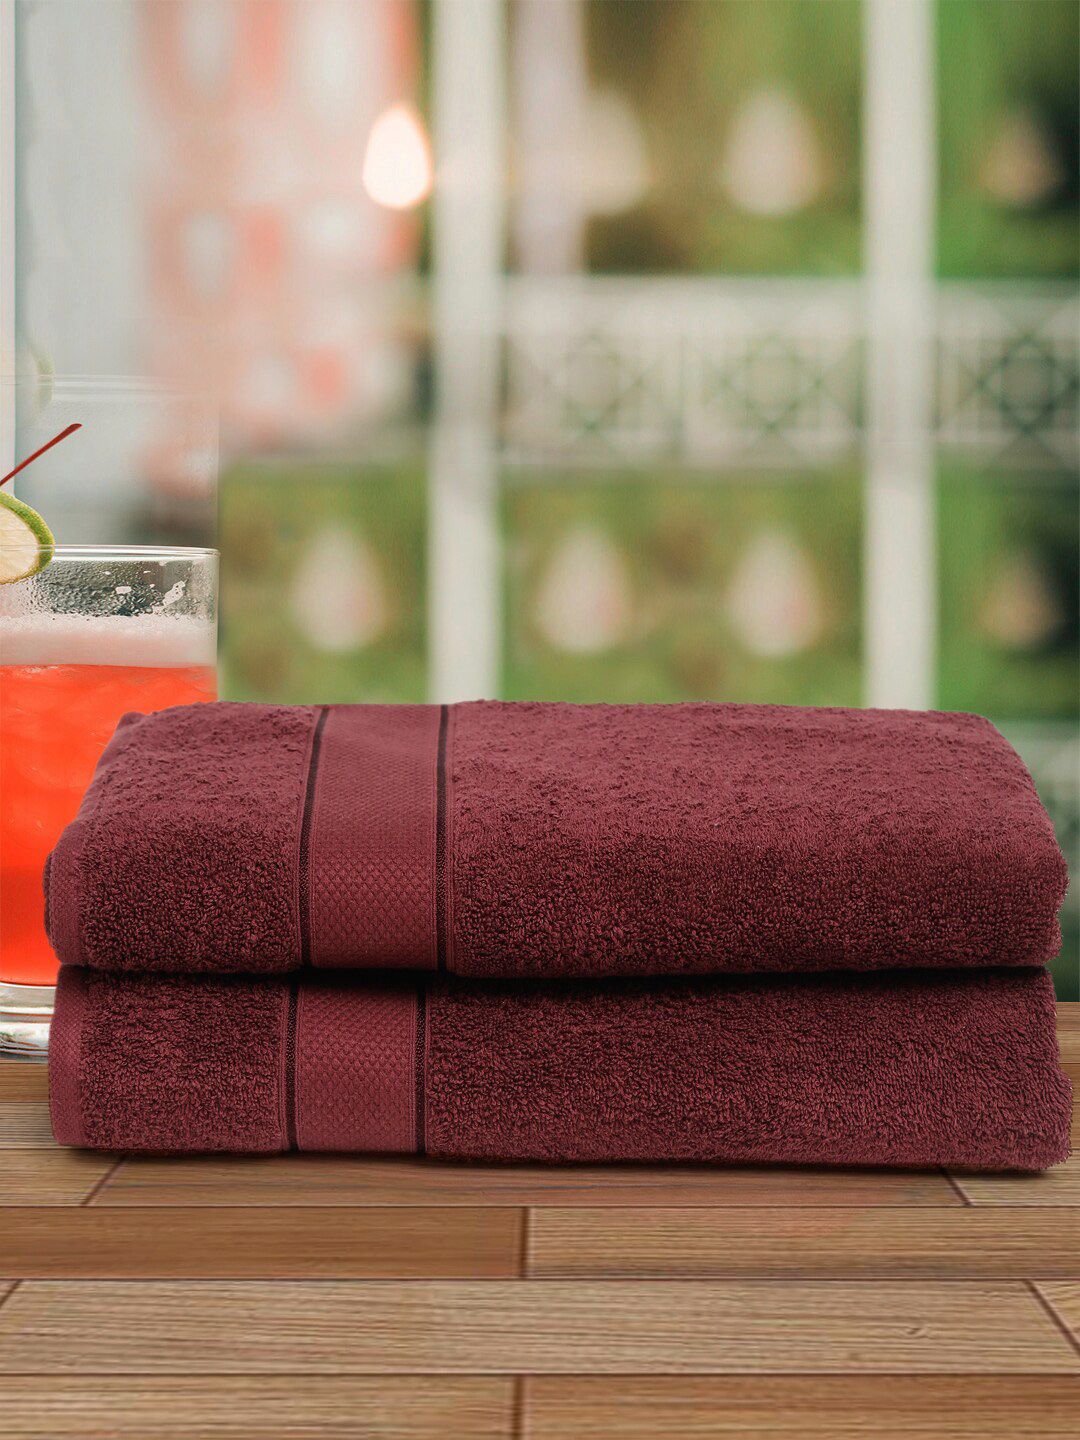 Creeva Unisex Burgundy Pack of 2 Bath Set Towel Price in India